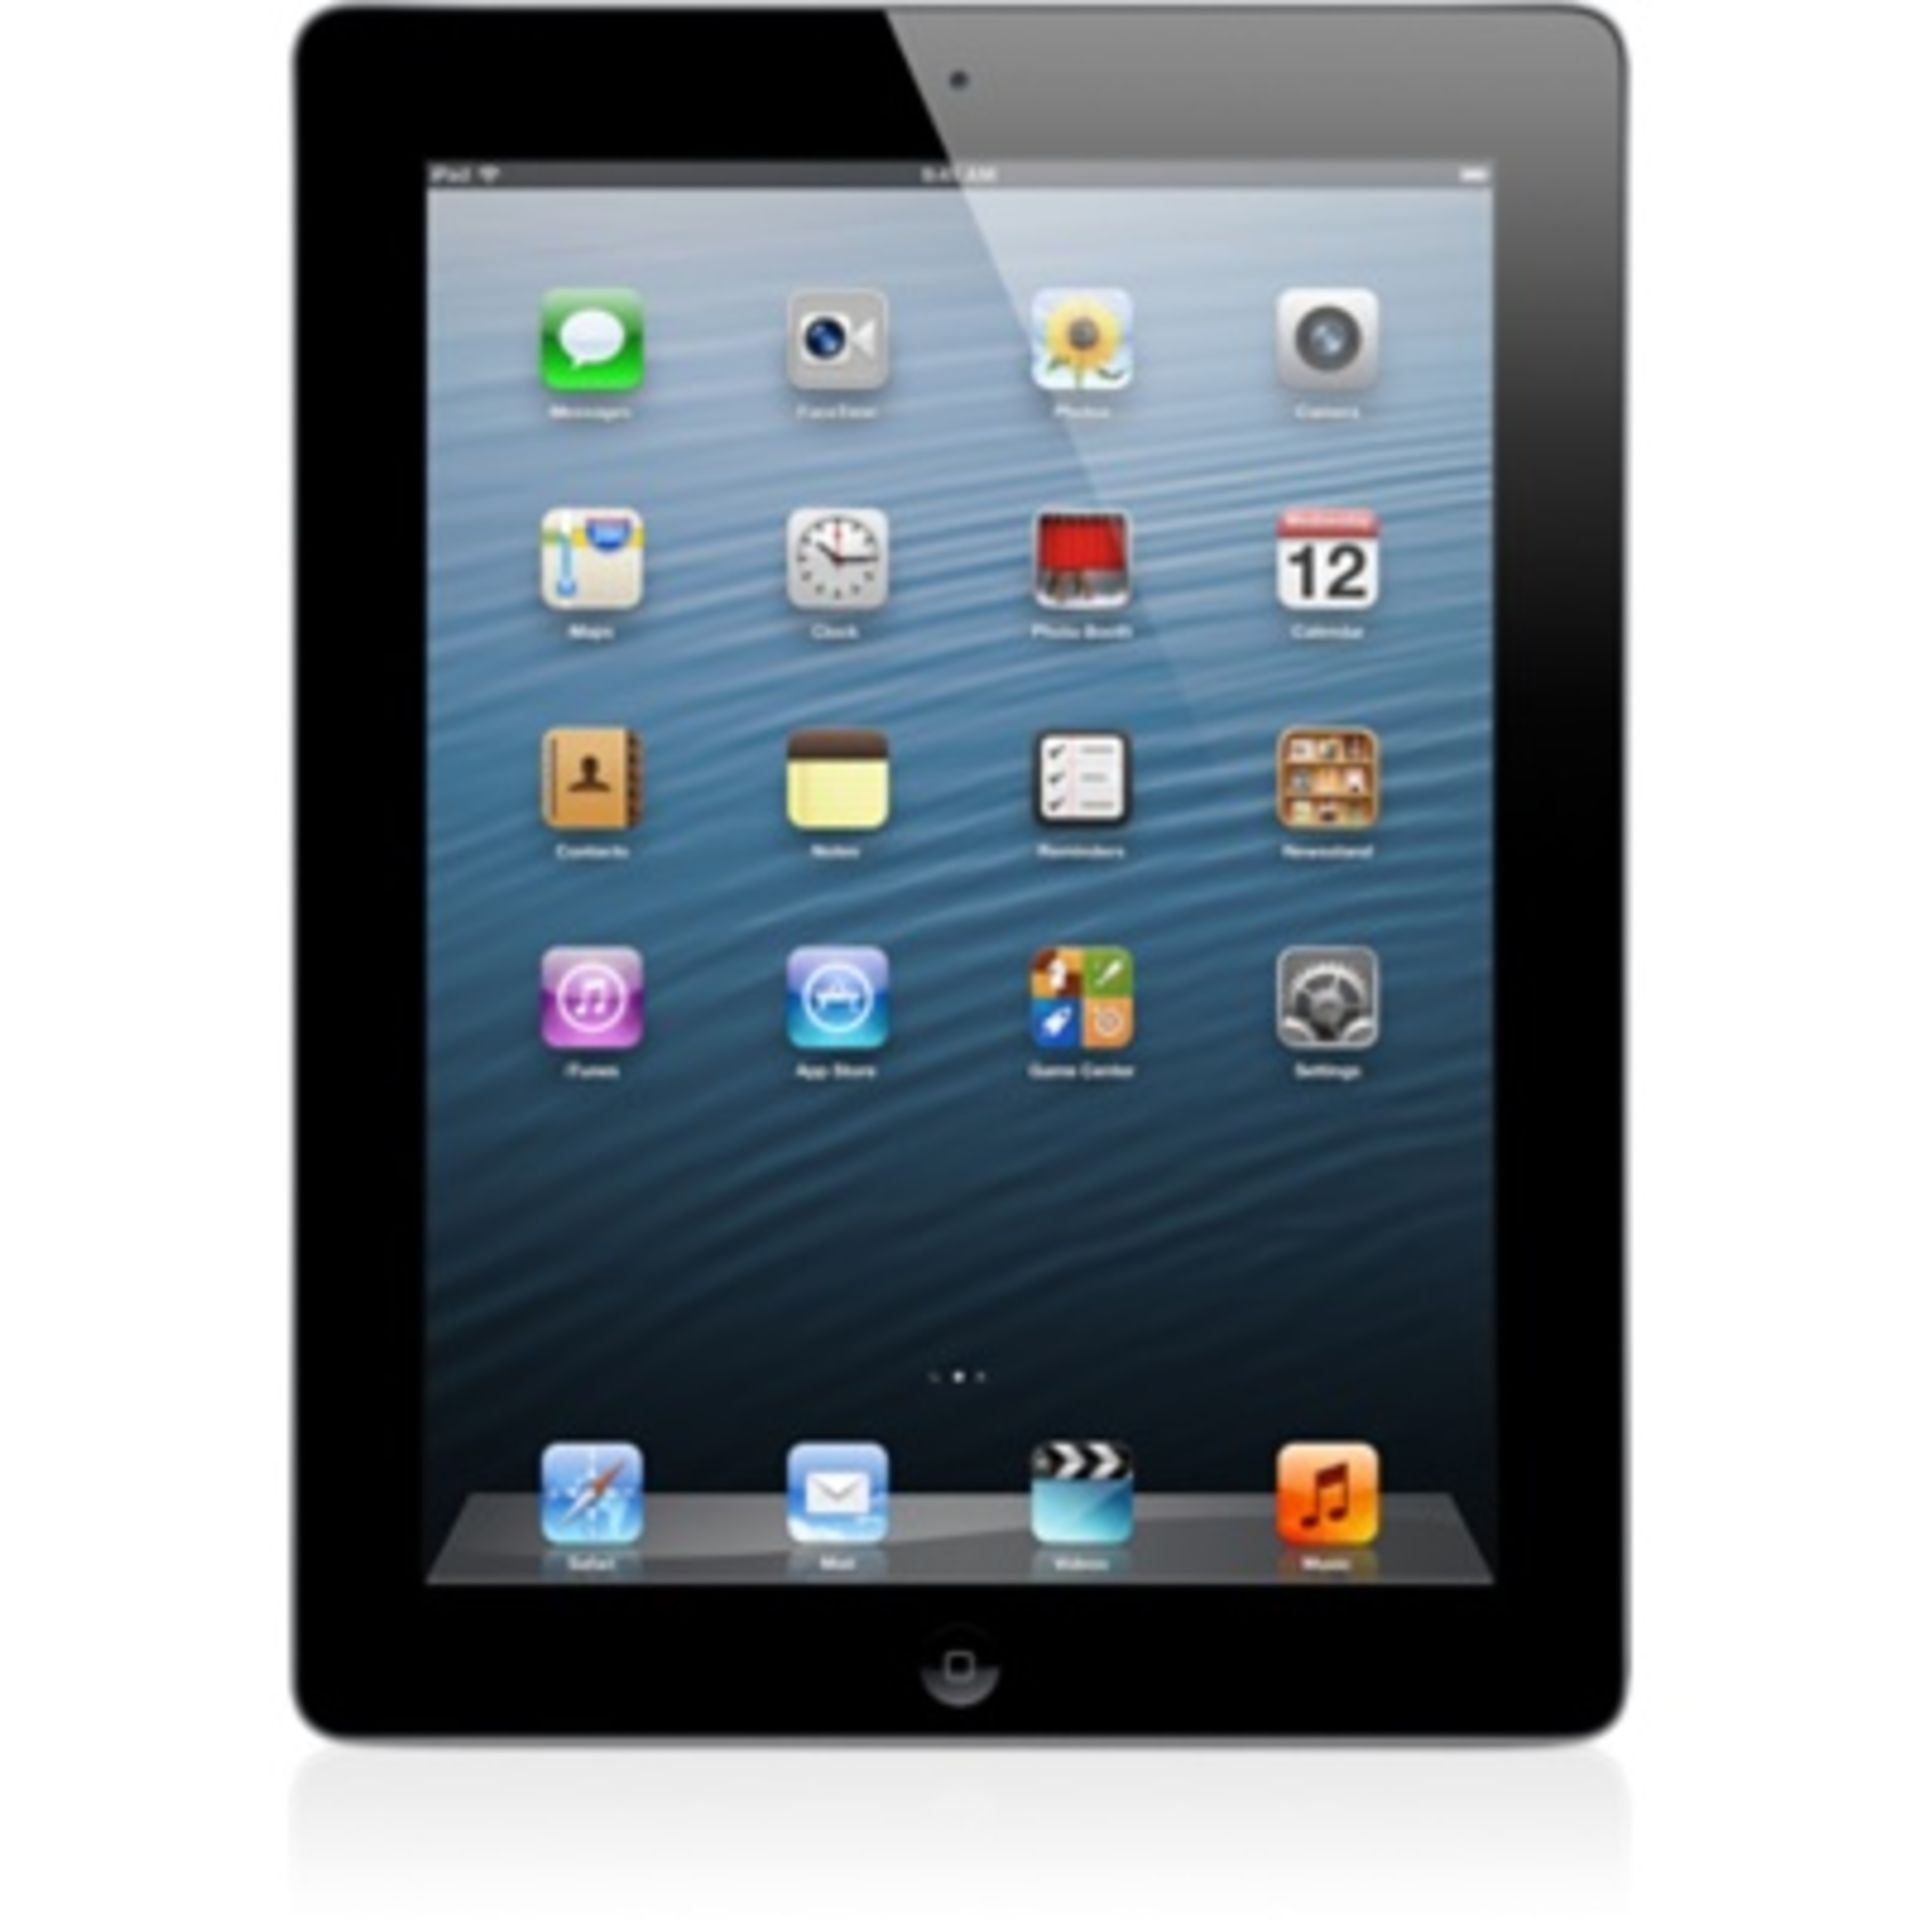 V Grade B Apple iPad 4 16GB Wi-Fi Black In Apple Box with Accessories